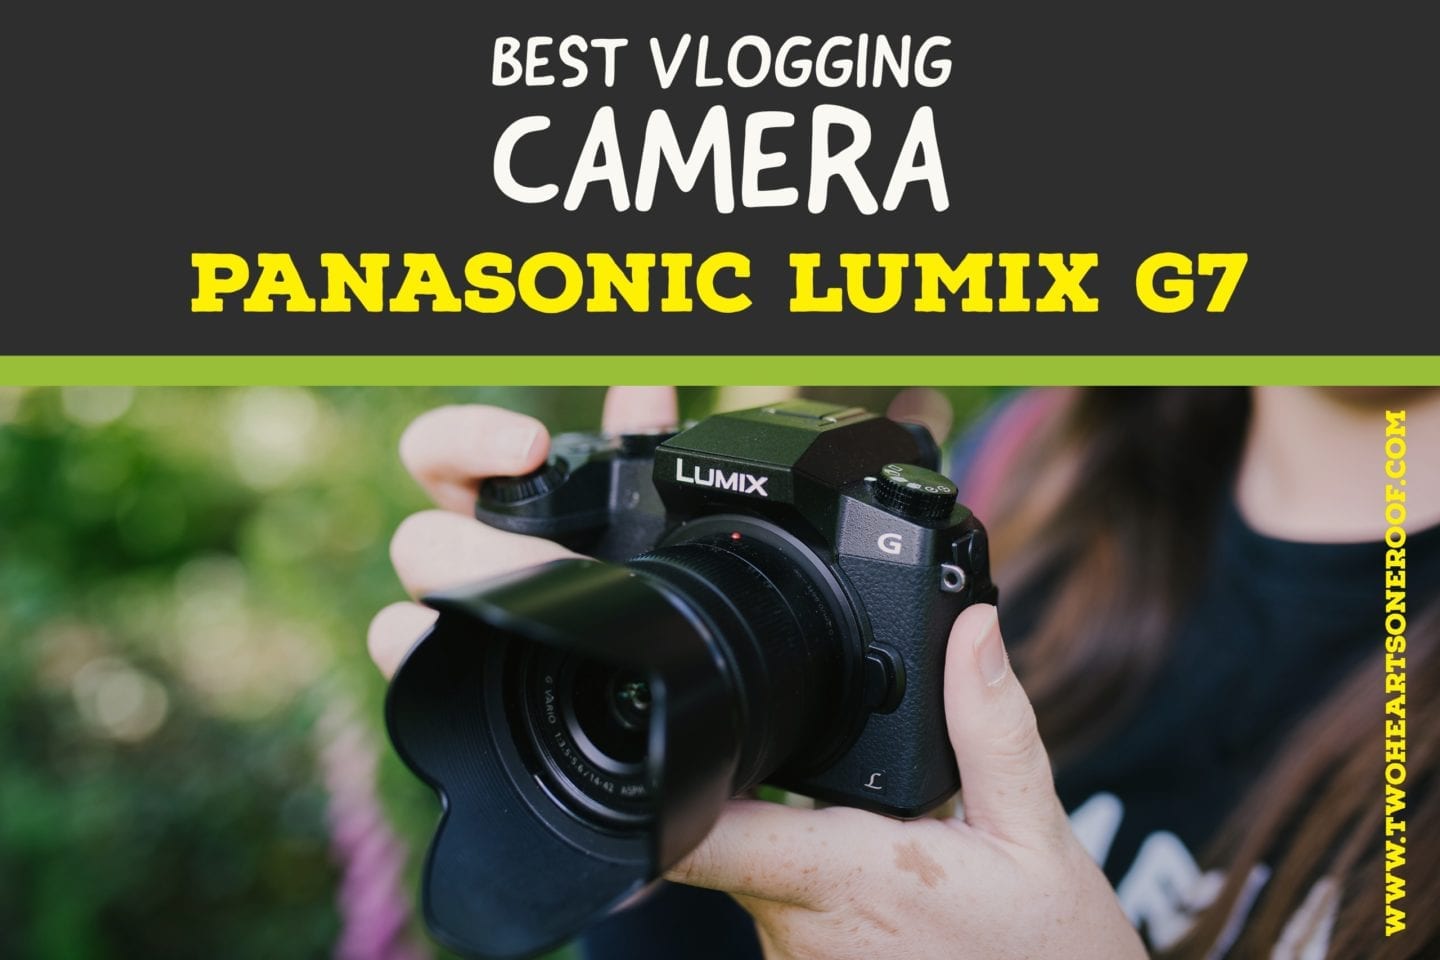 Our New Vlogging Camera-Goodbye Sony Hello Panasonic G7